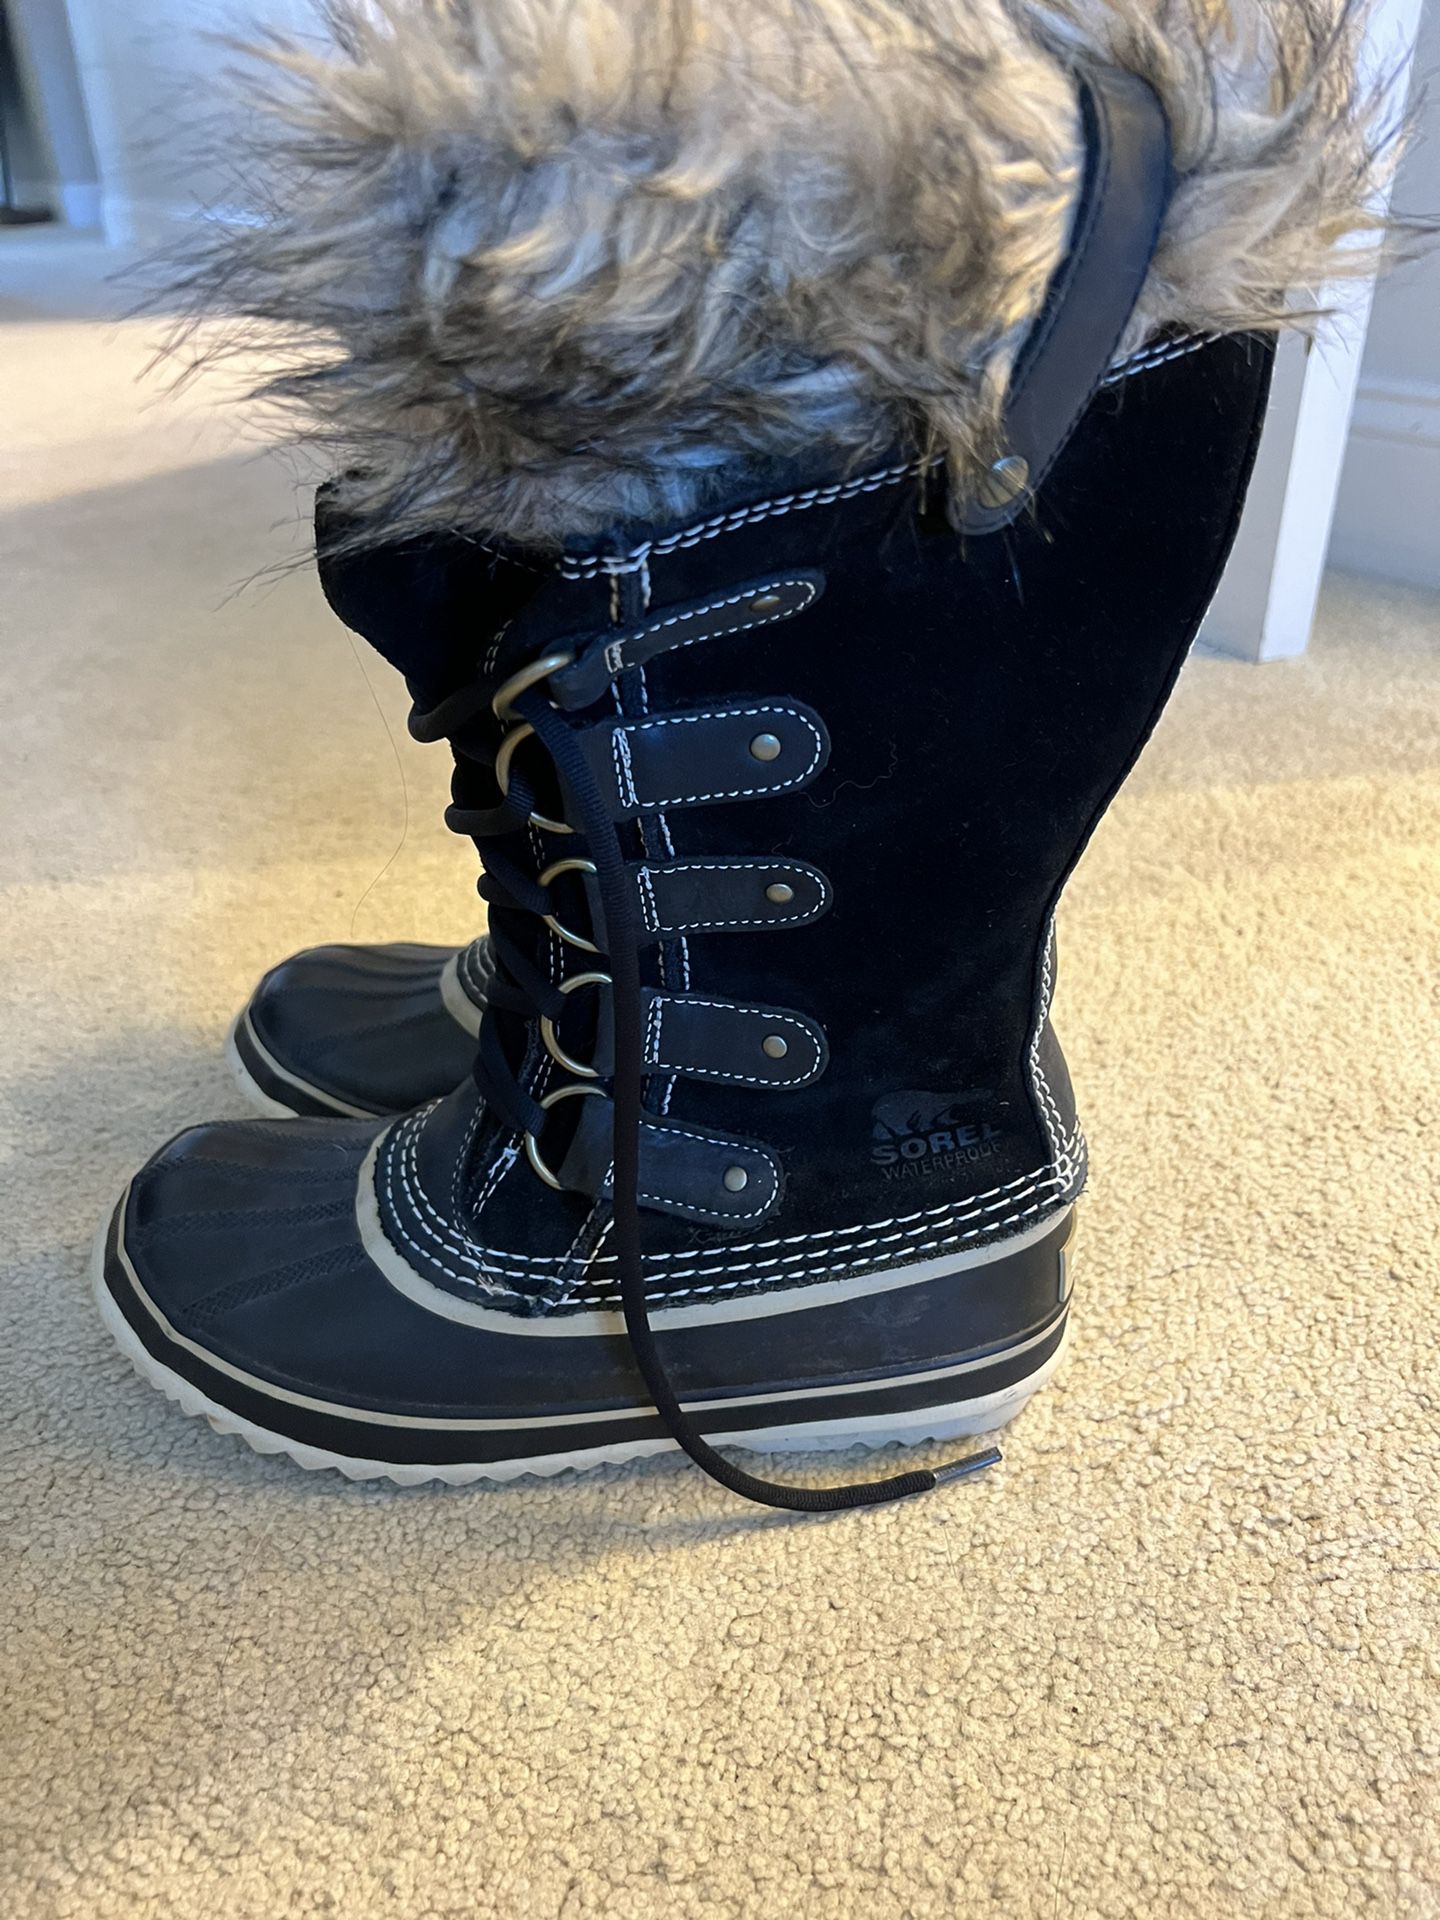 Sorel Winter Boots Size 7